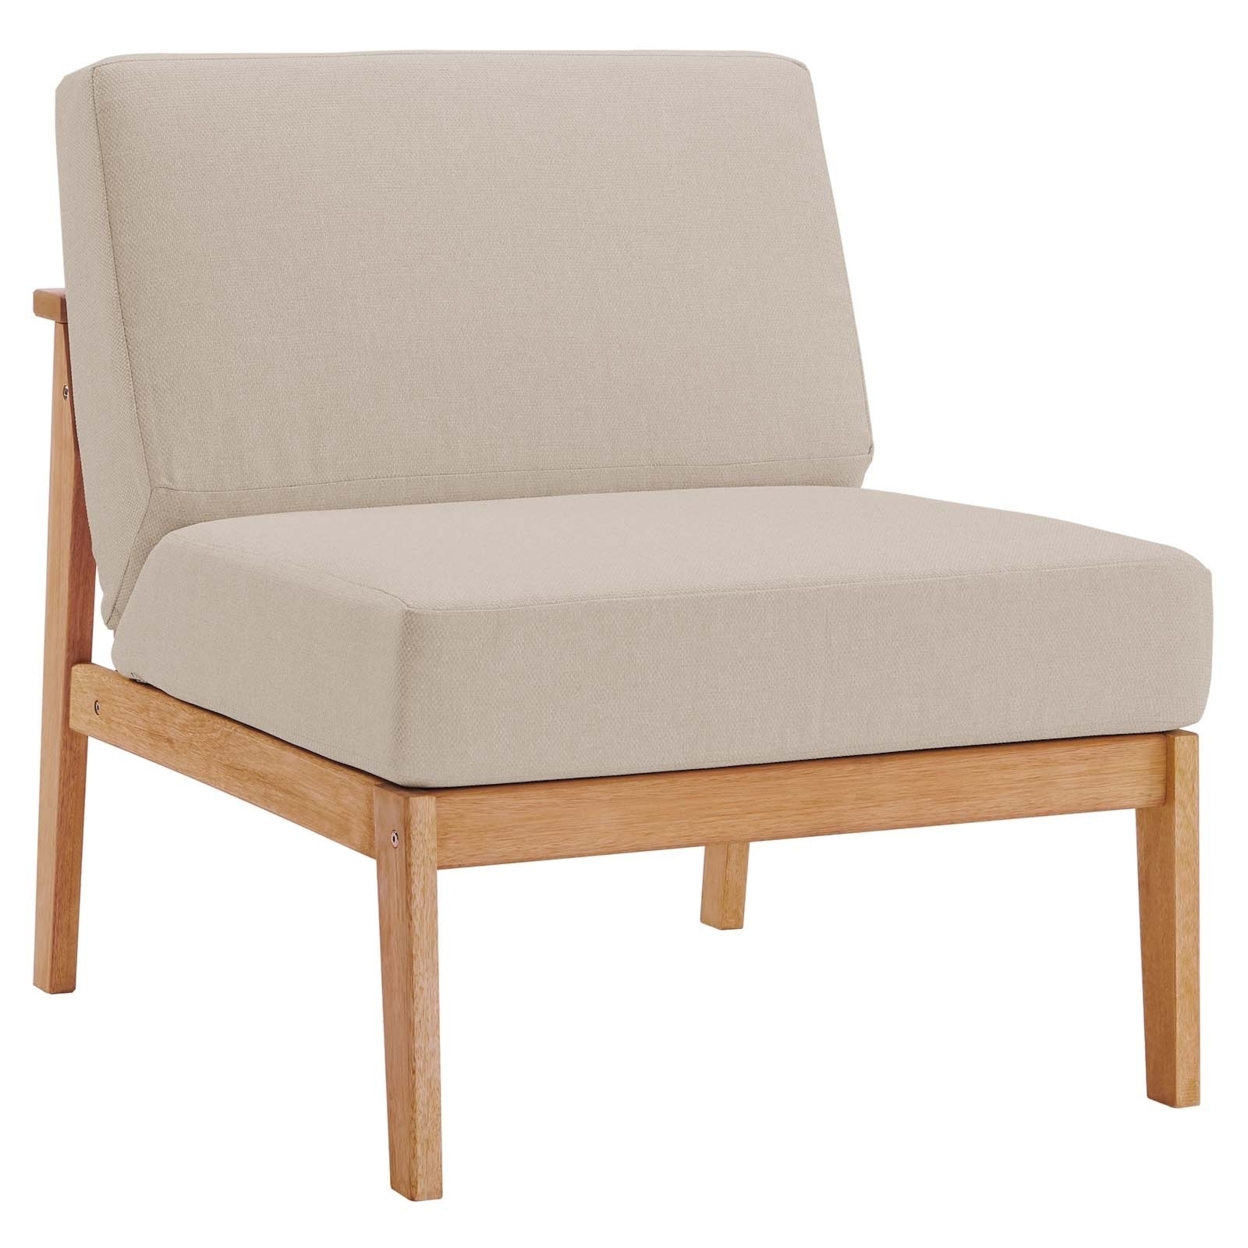 Sedona Outdoor Patio Eucalyptus Wood Sectional Sofa Armless Chair, Natural Taupe